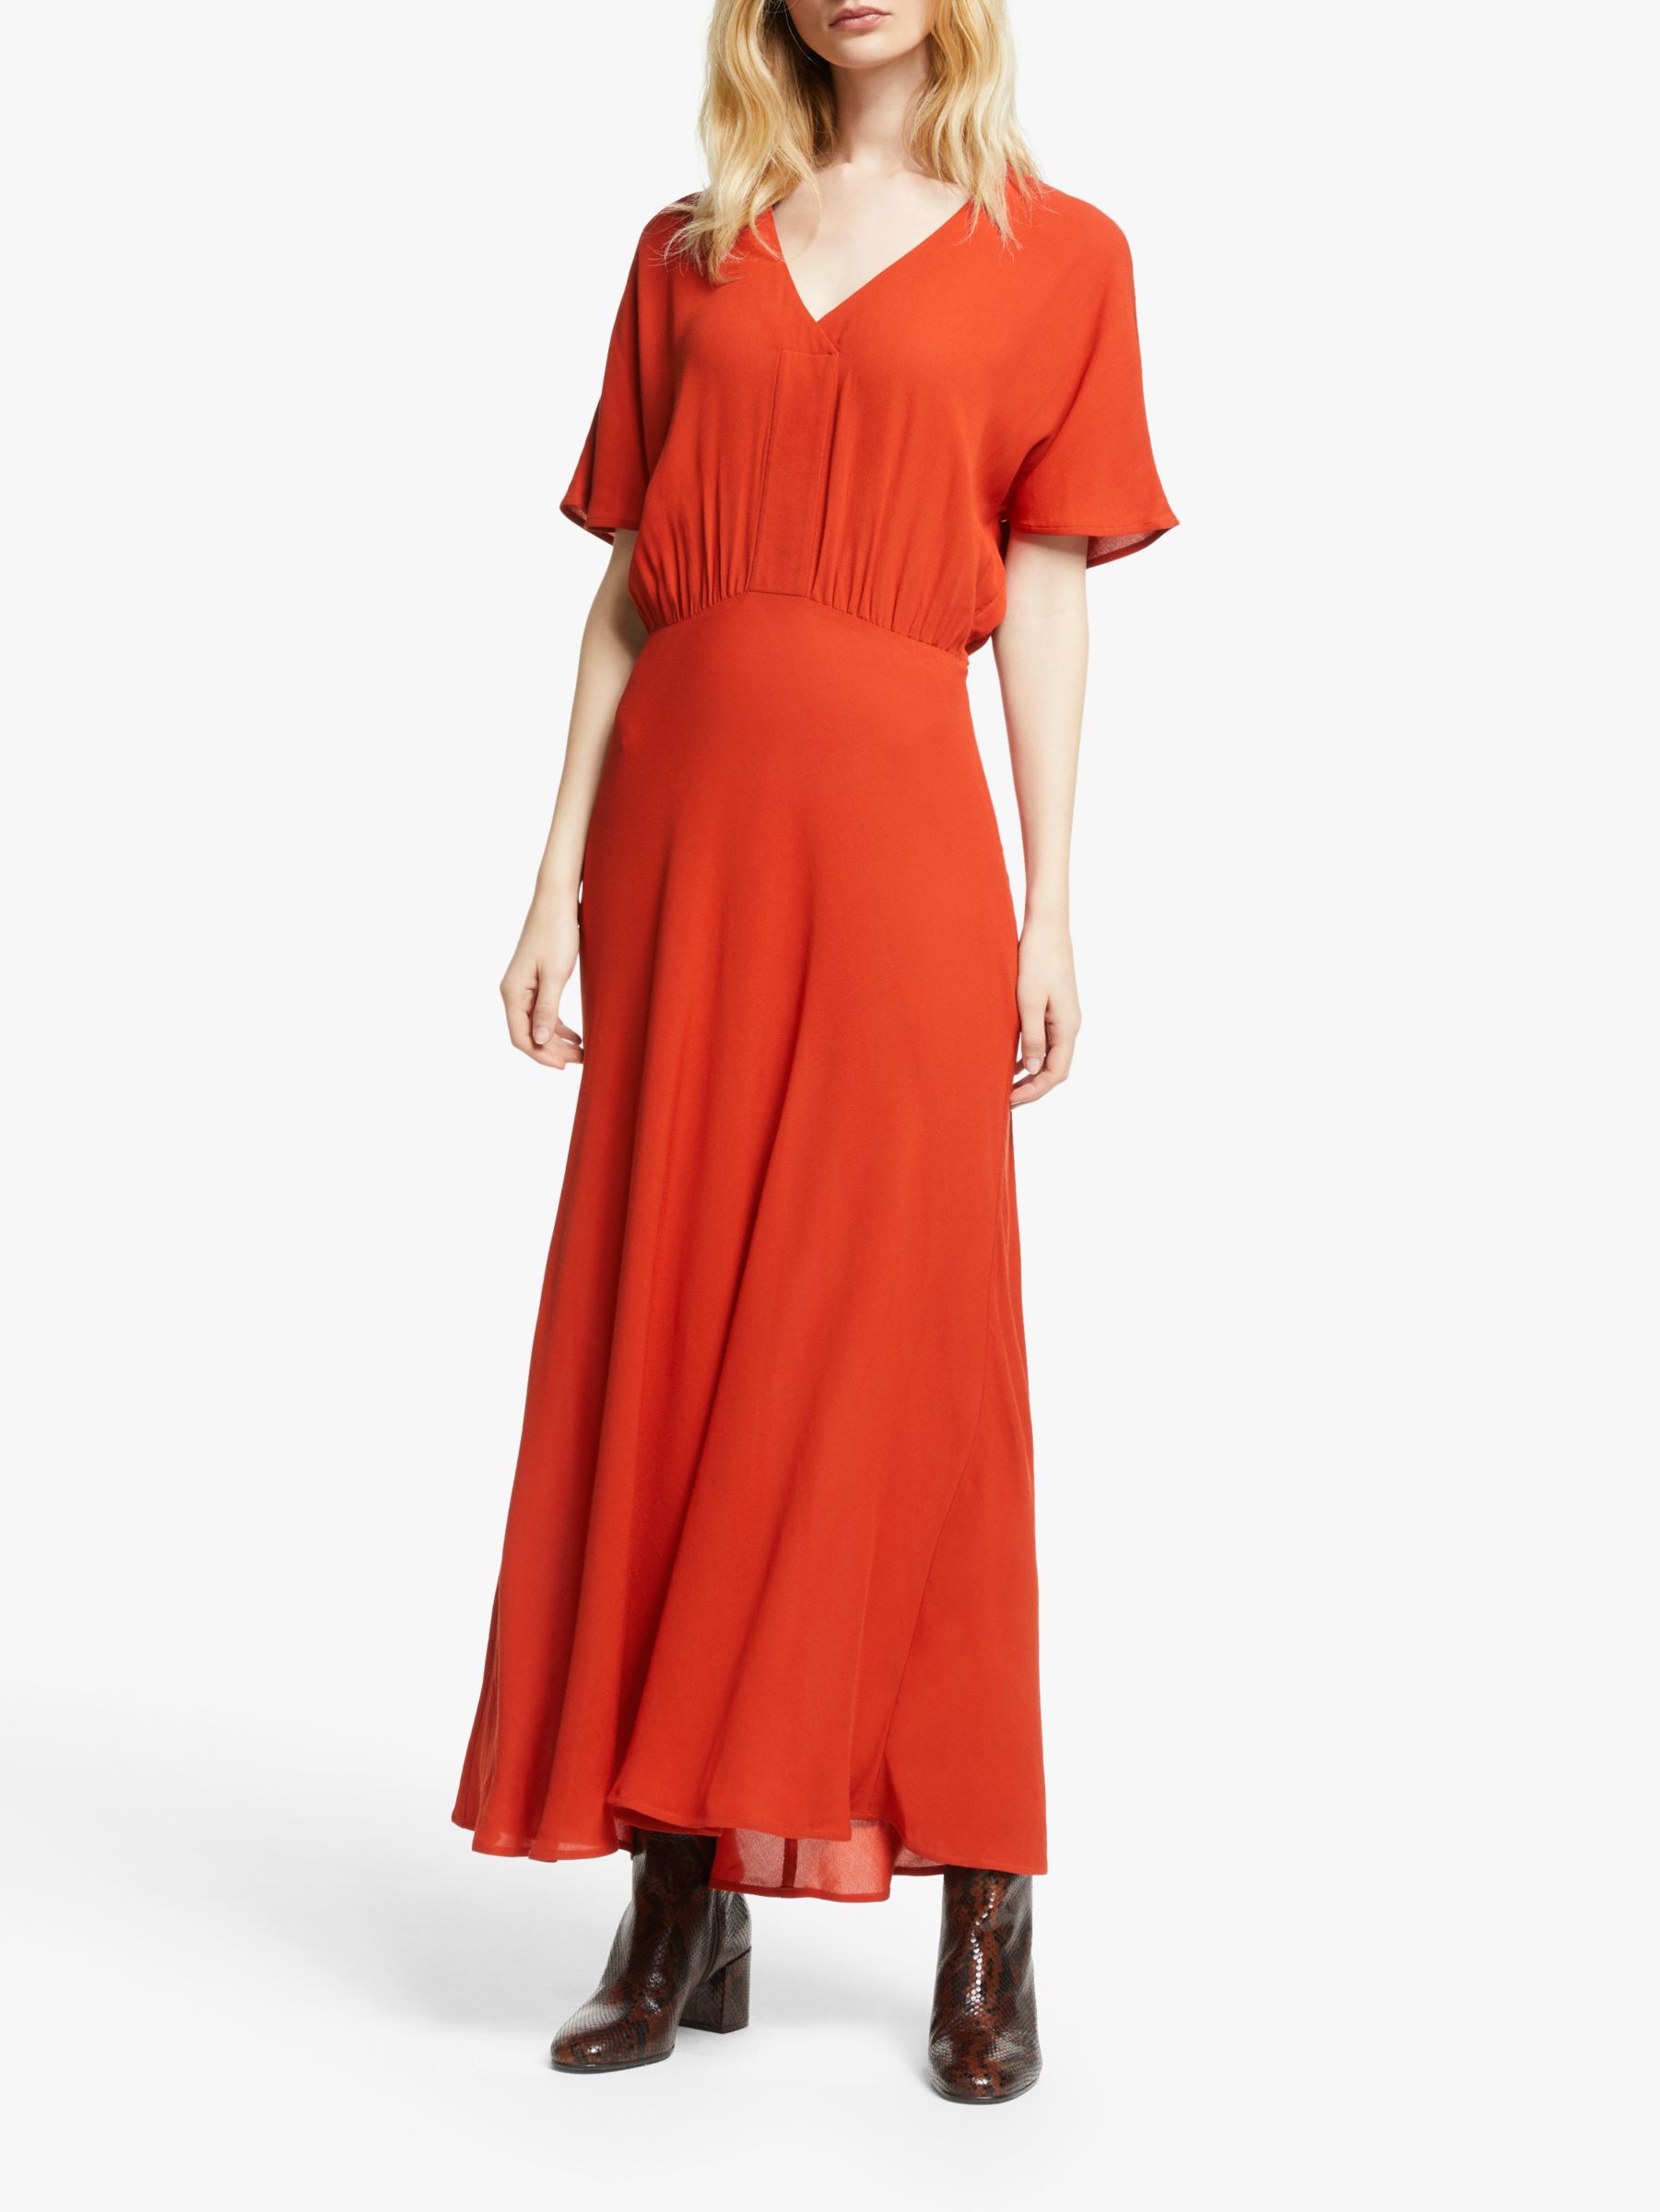 John Lewis & Partners Grown On Sleeve Dress, Dark Red at John Lewis